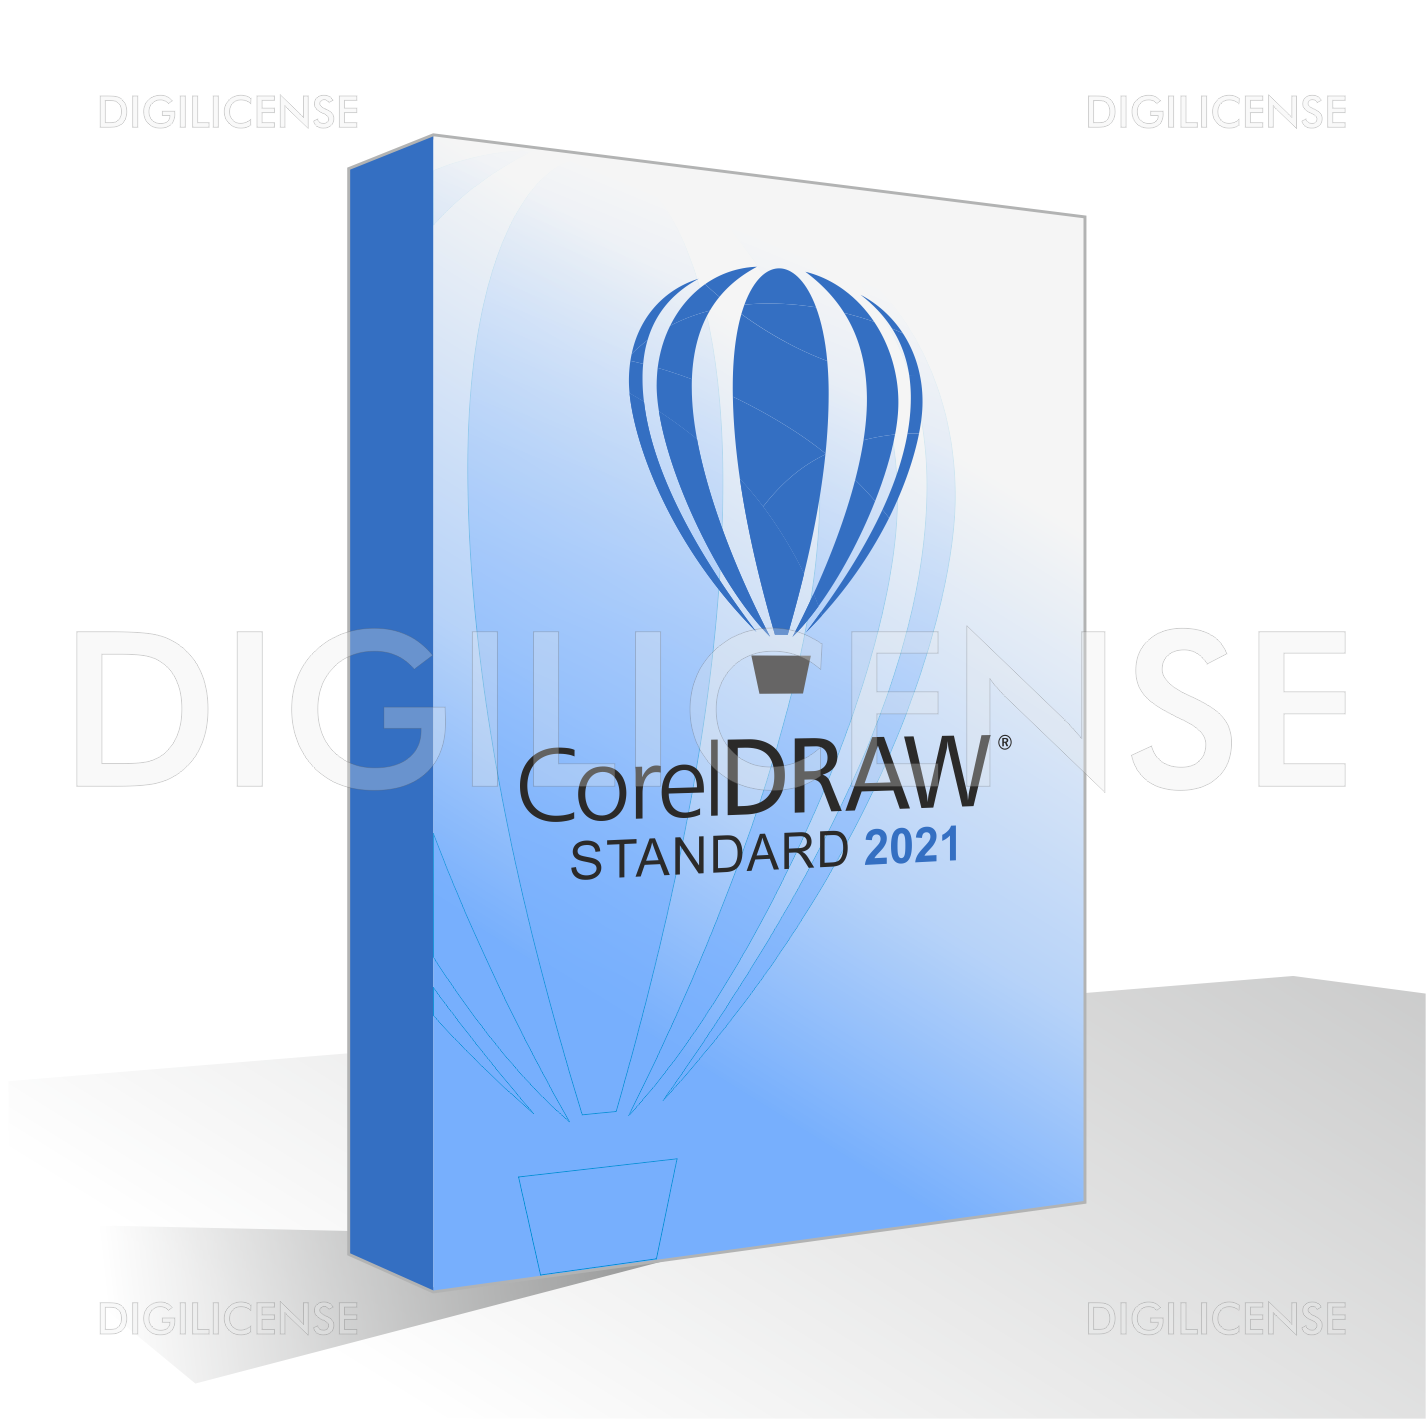 Free High-Quality CorelDraw 12 Logo for Creative Design